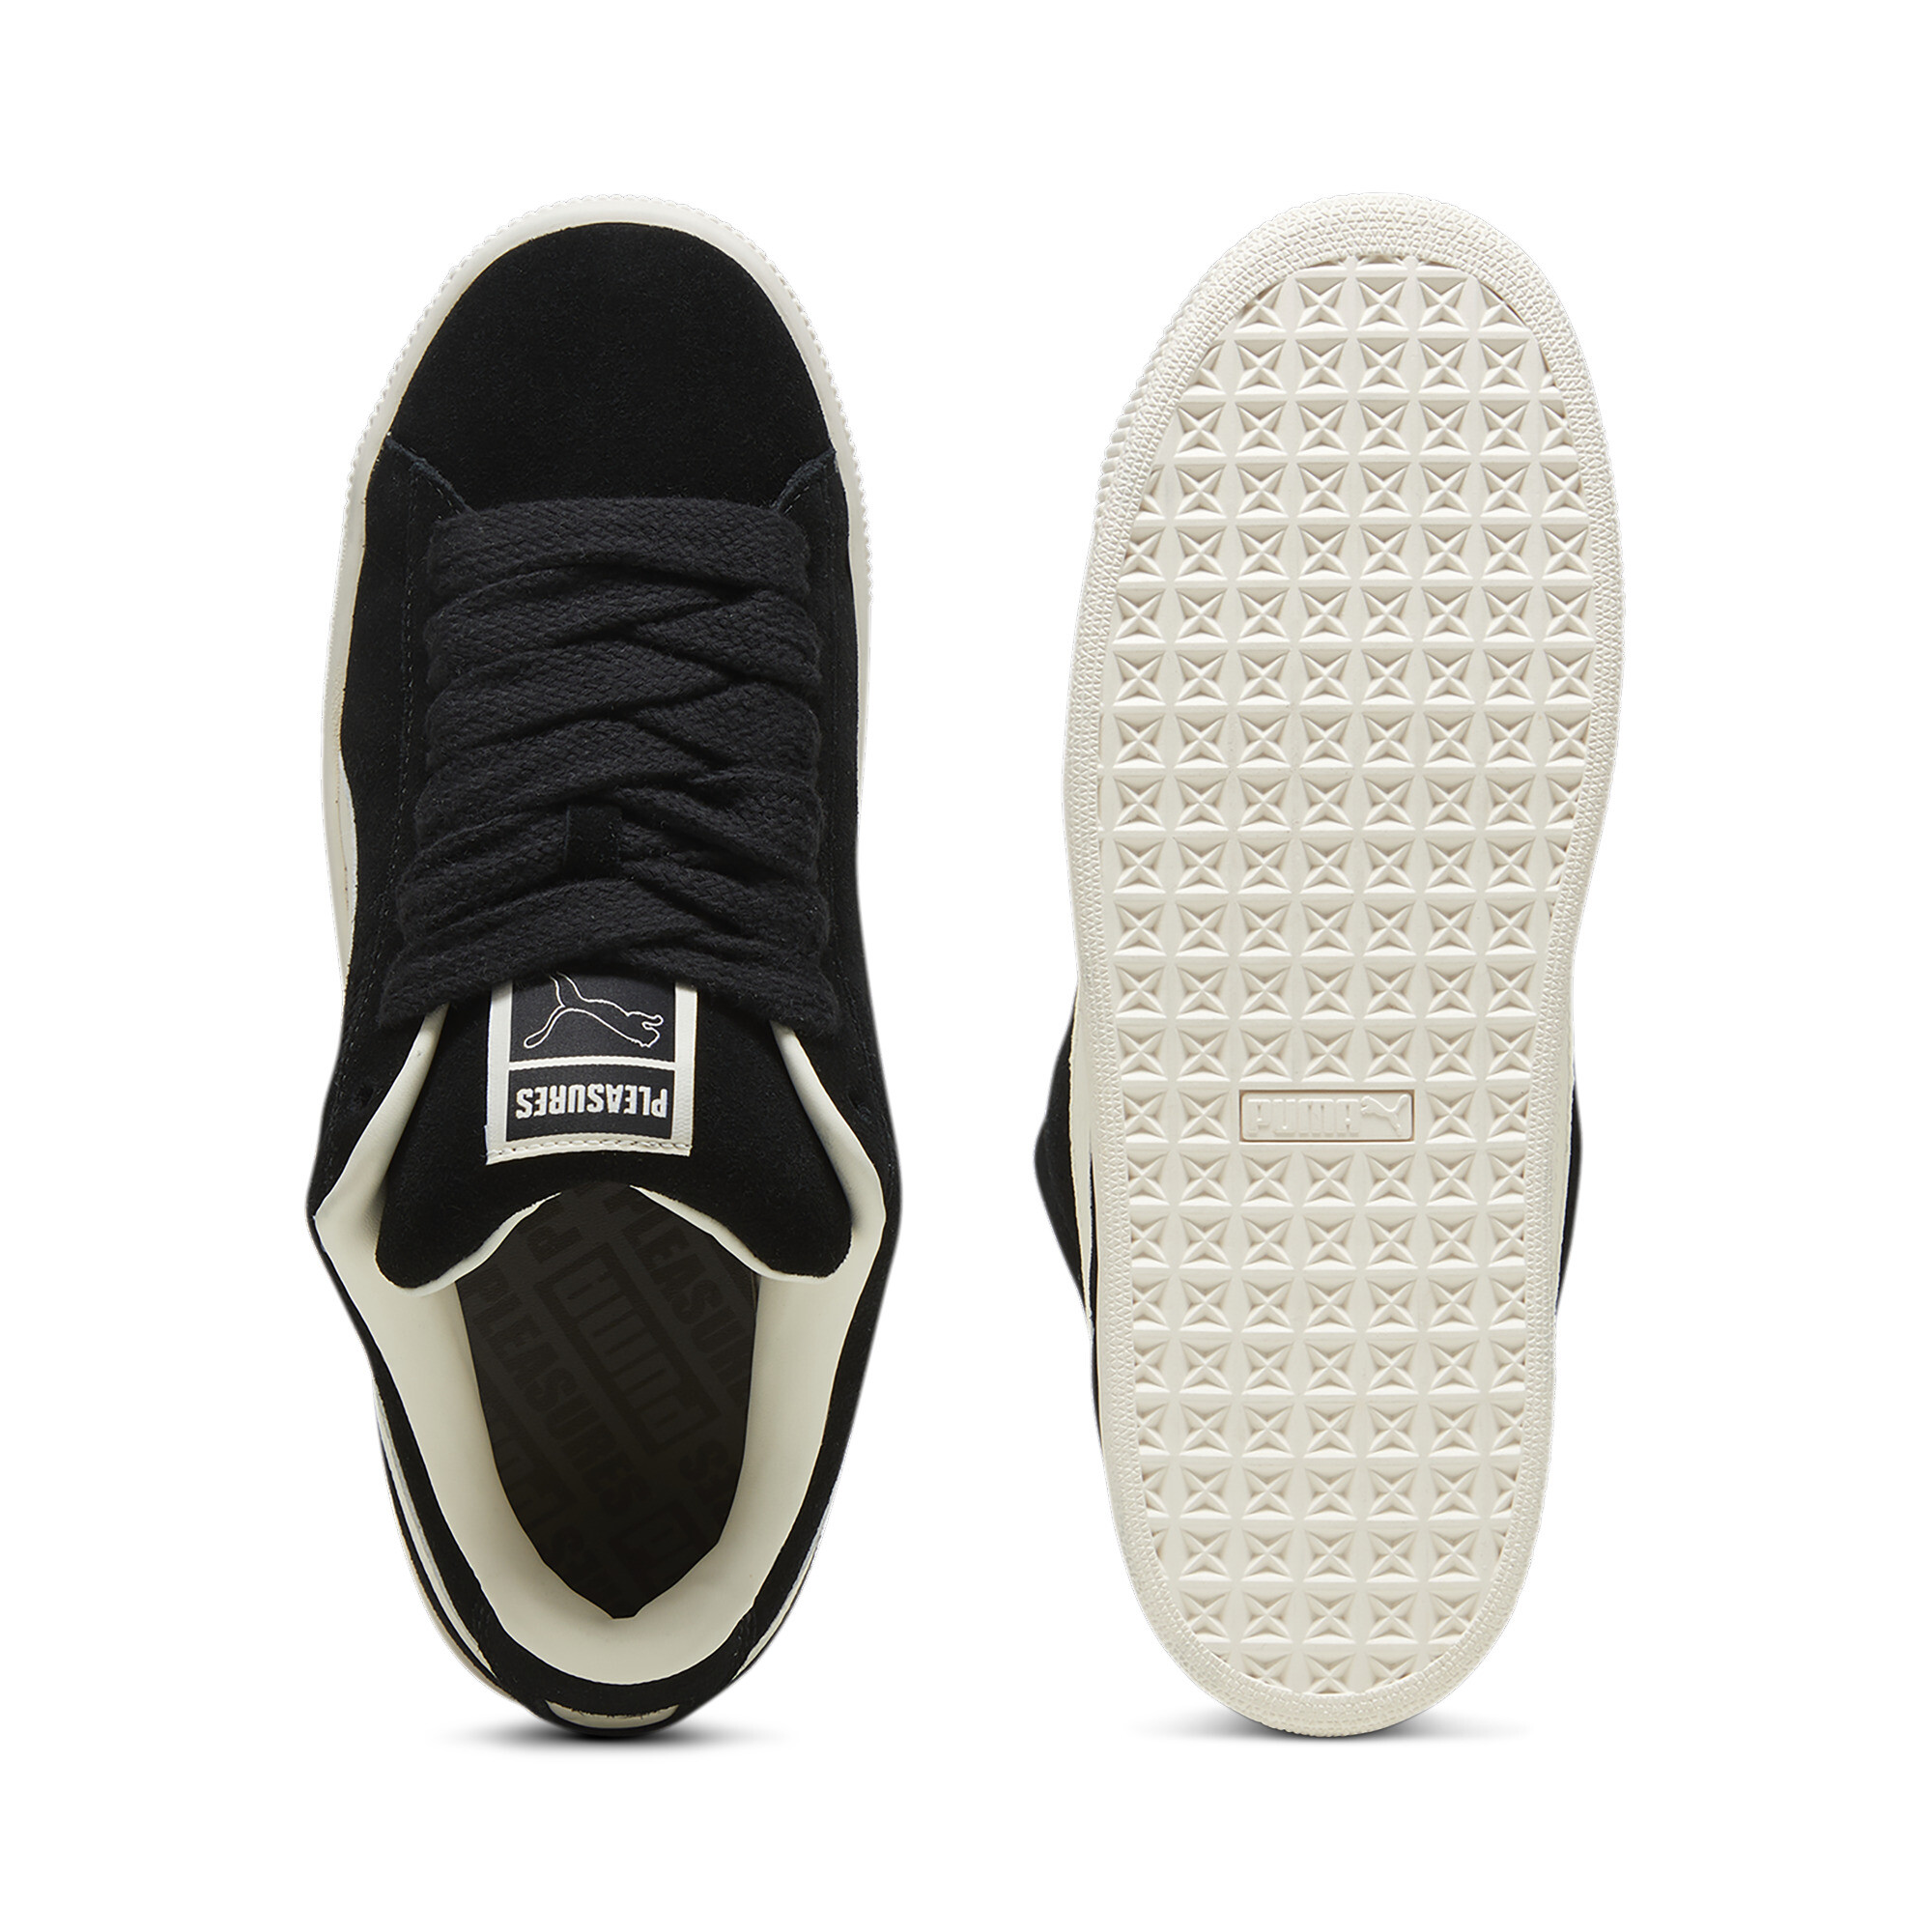 Men's PUMA X PLEASURES Suede XL Sneakers In Black, Size EU 42.5